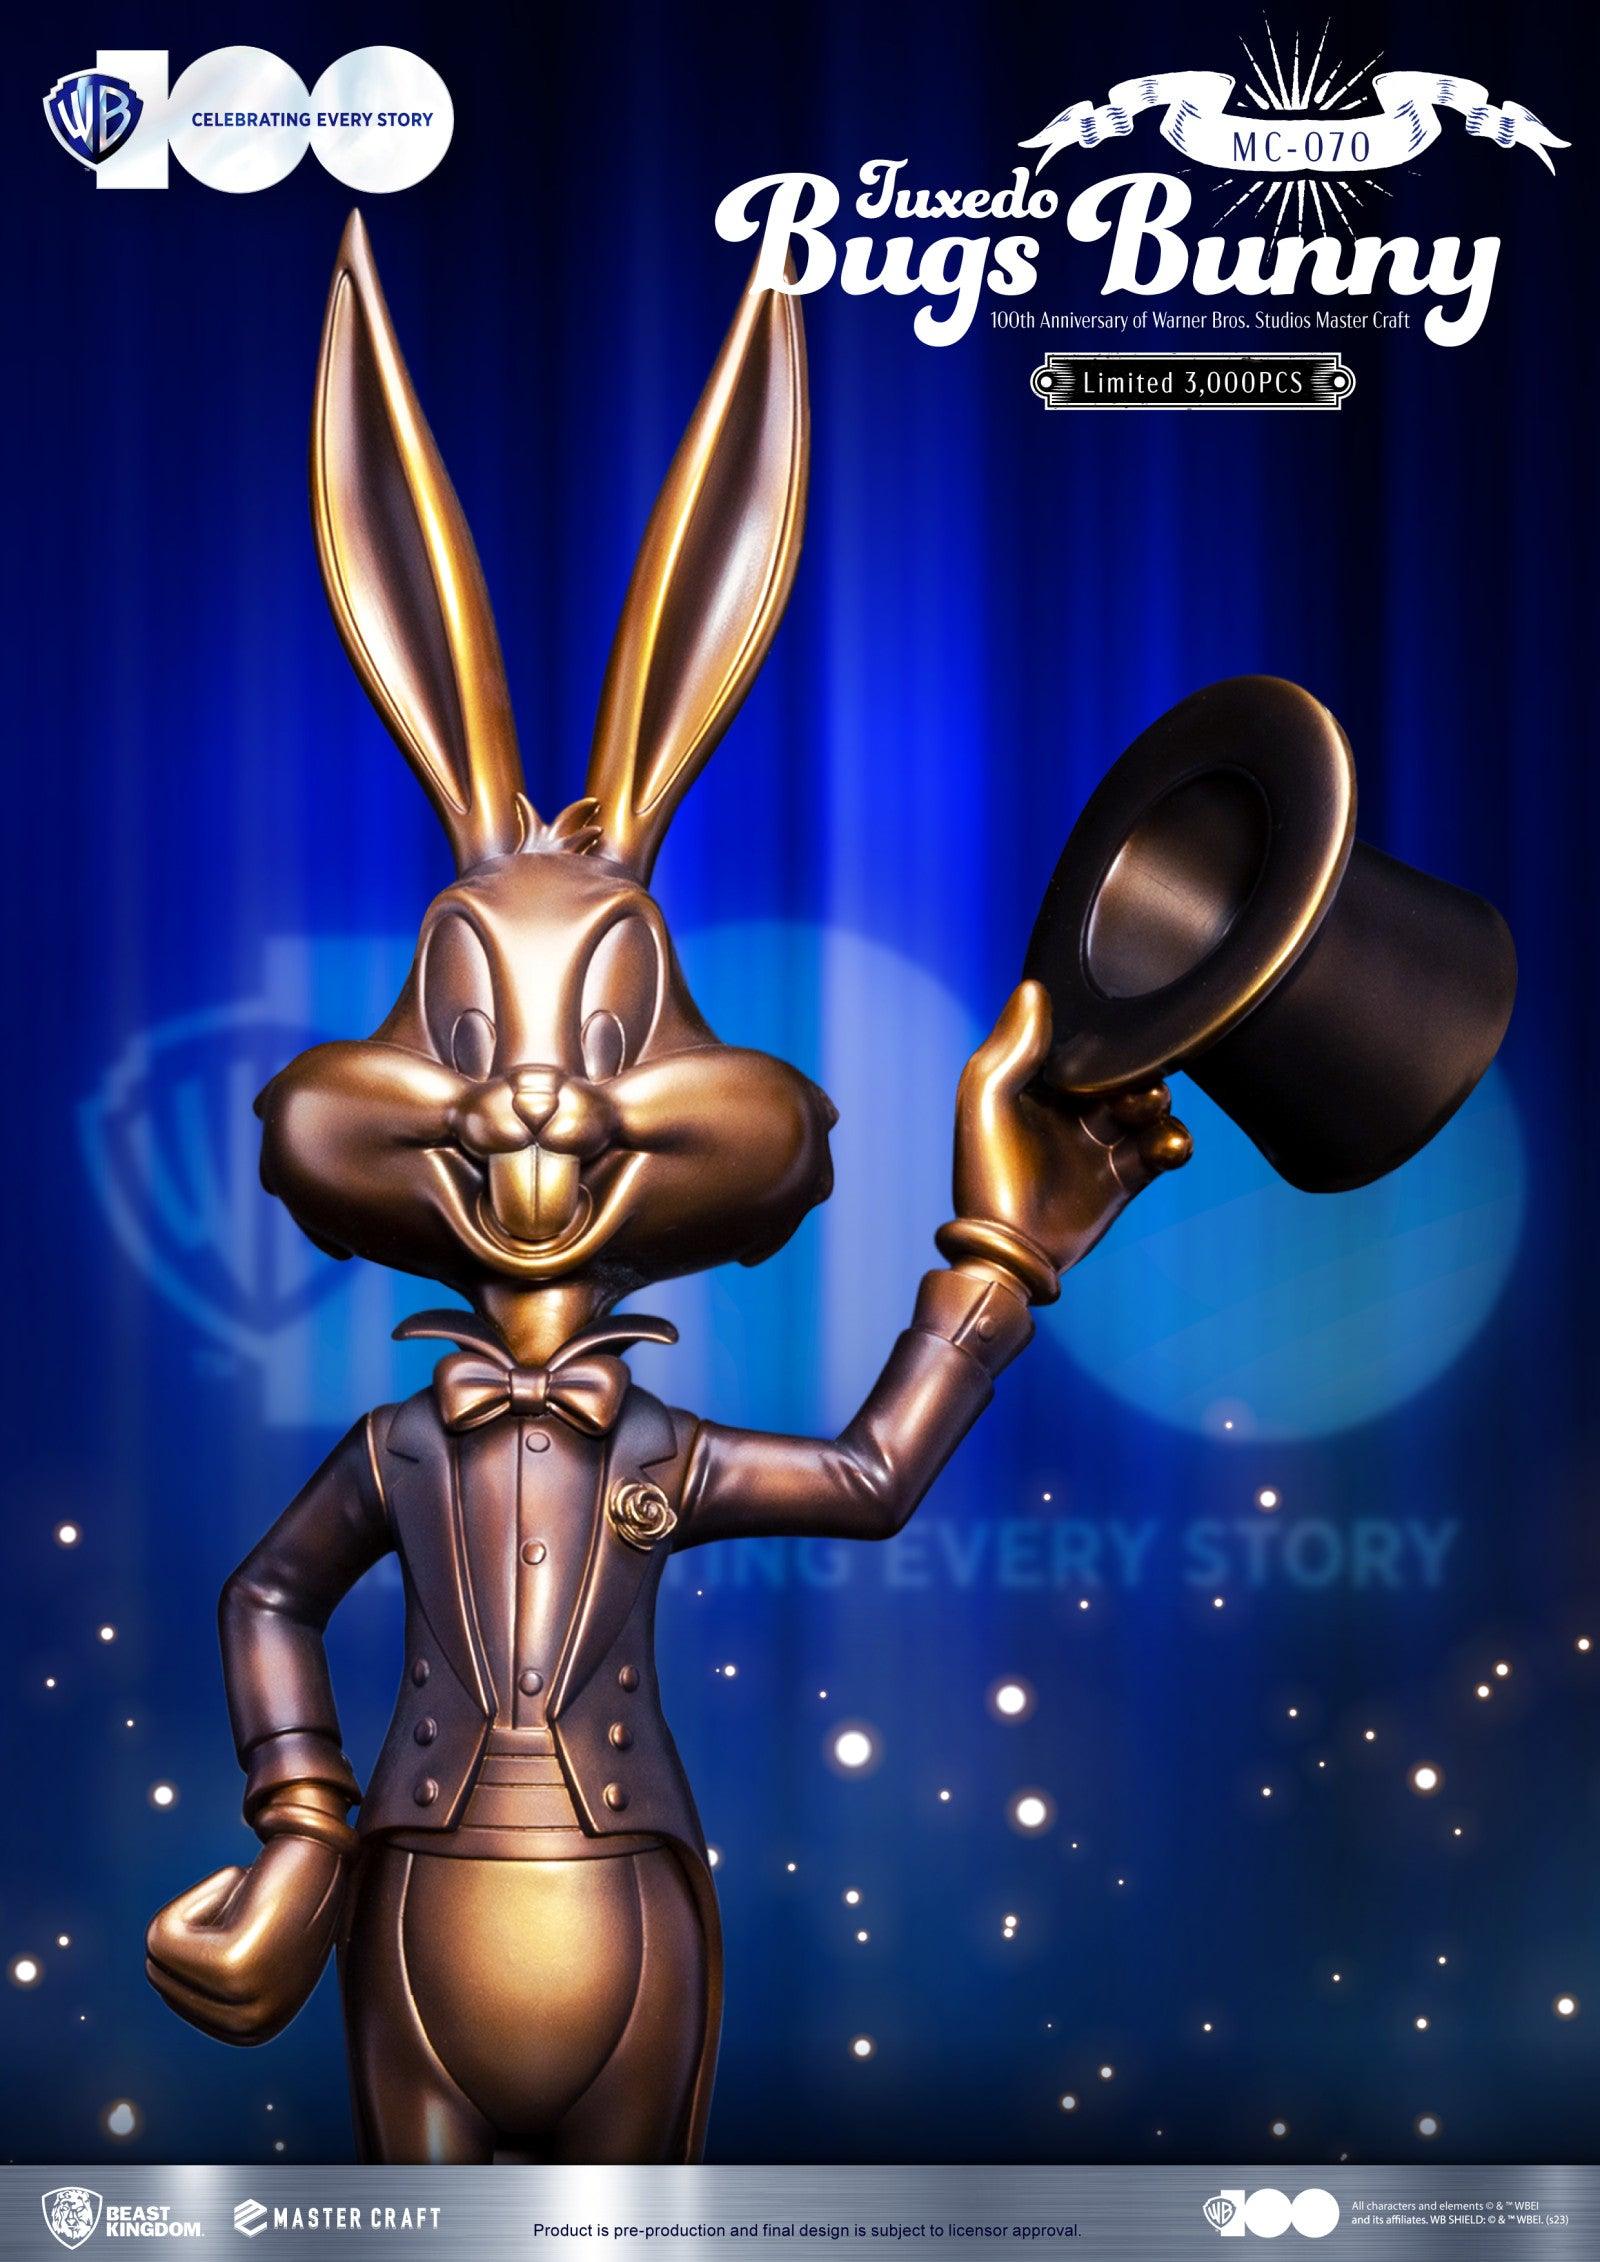 VR-112355 Beast Kingdom Master Craft 100th Anniversary of Warner Bros Studios Tuxedo Bugs Bunny - Beast Kingdom - Titan Pop Culture